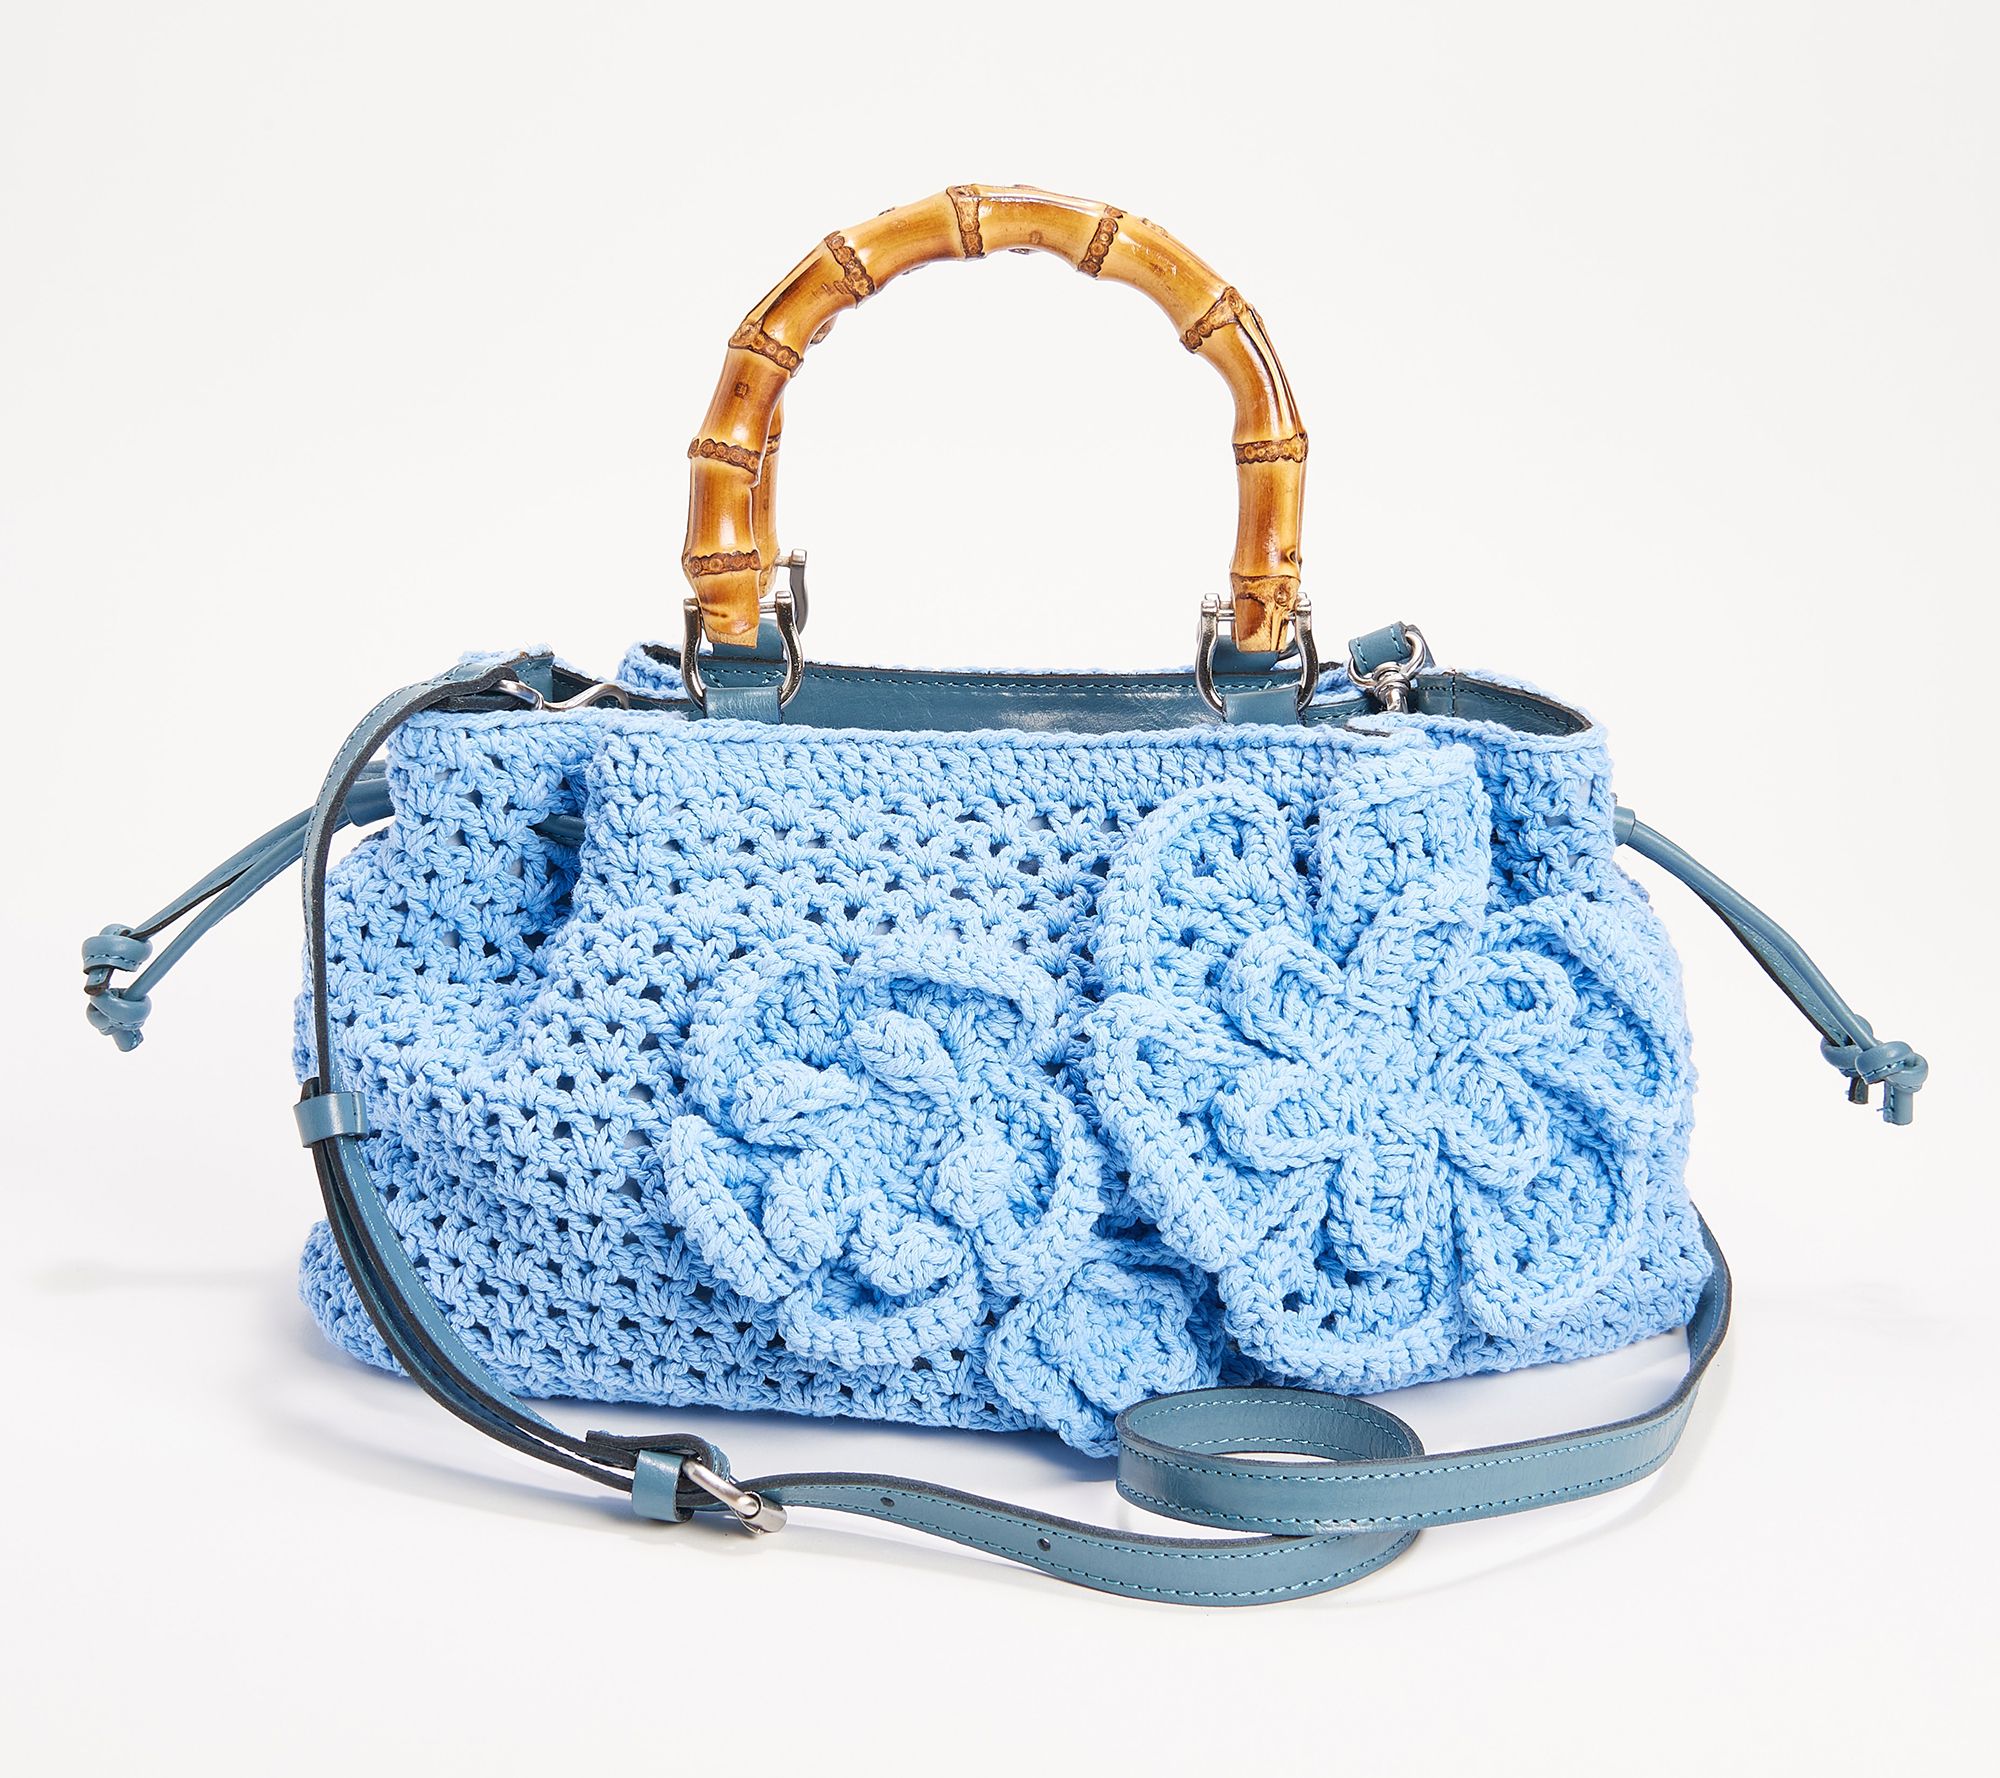 crochet bag handle cover